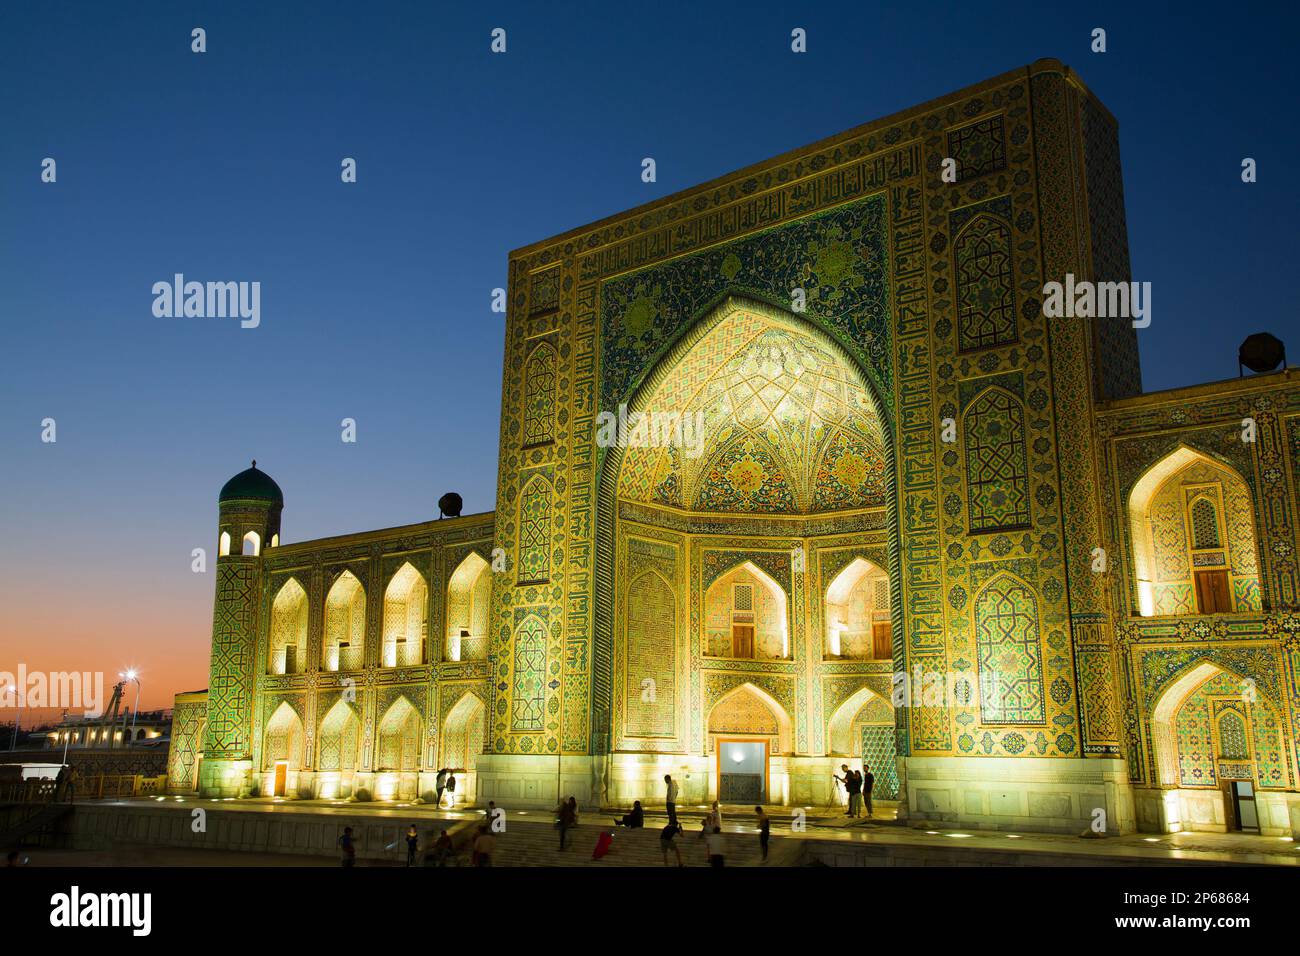 Abend, Tilla-Kari Madrassah, fertiggestellt 1660, Registanplatz, UNESCO-Weltkulturerbe, Samarkand, Usbekistan, Zentralasien, Asien Stockfoto